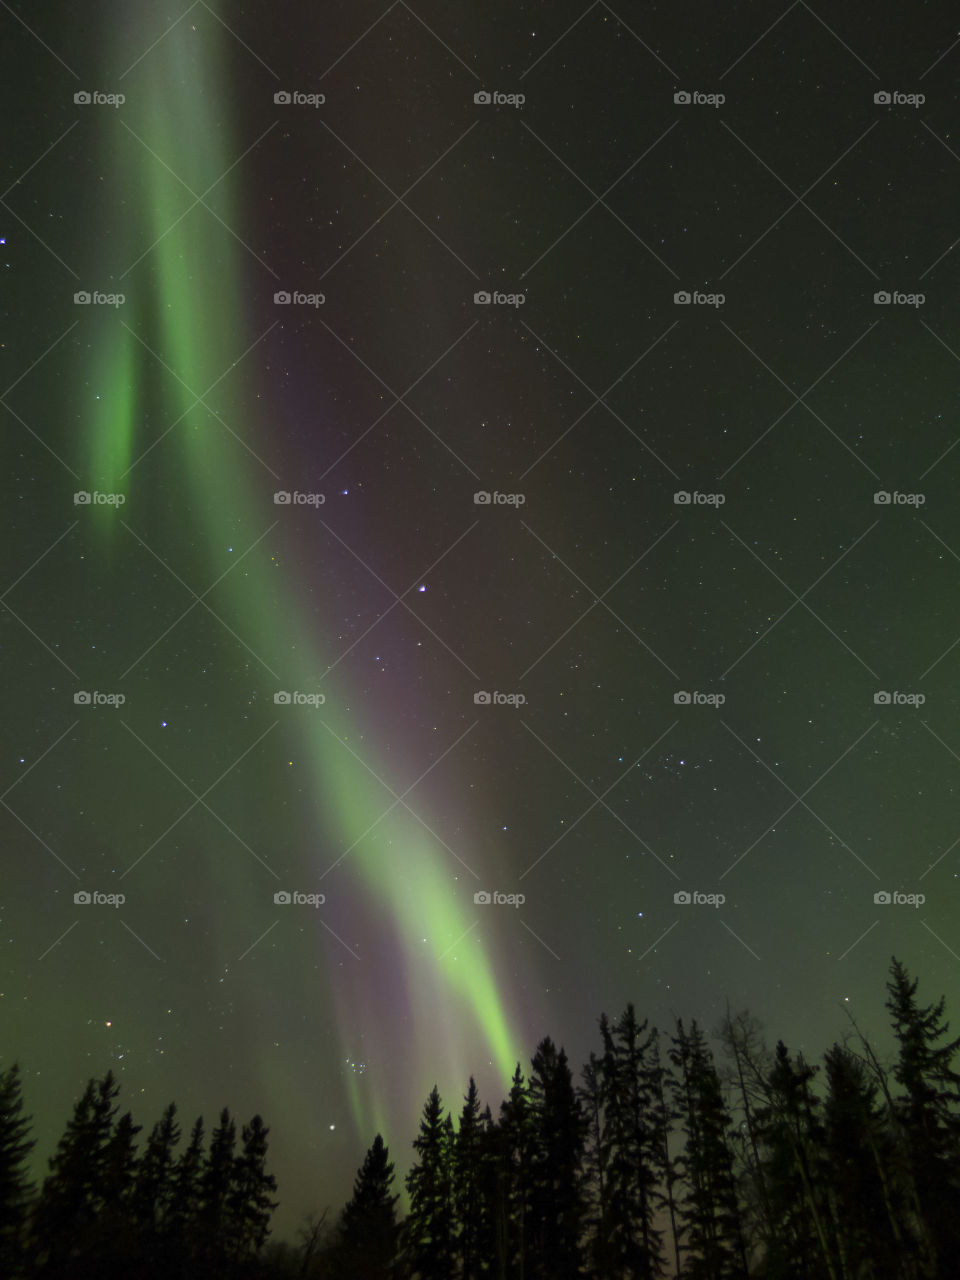 Aurora Borealis (northern lights) in Alberta, Canada